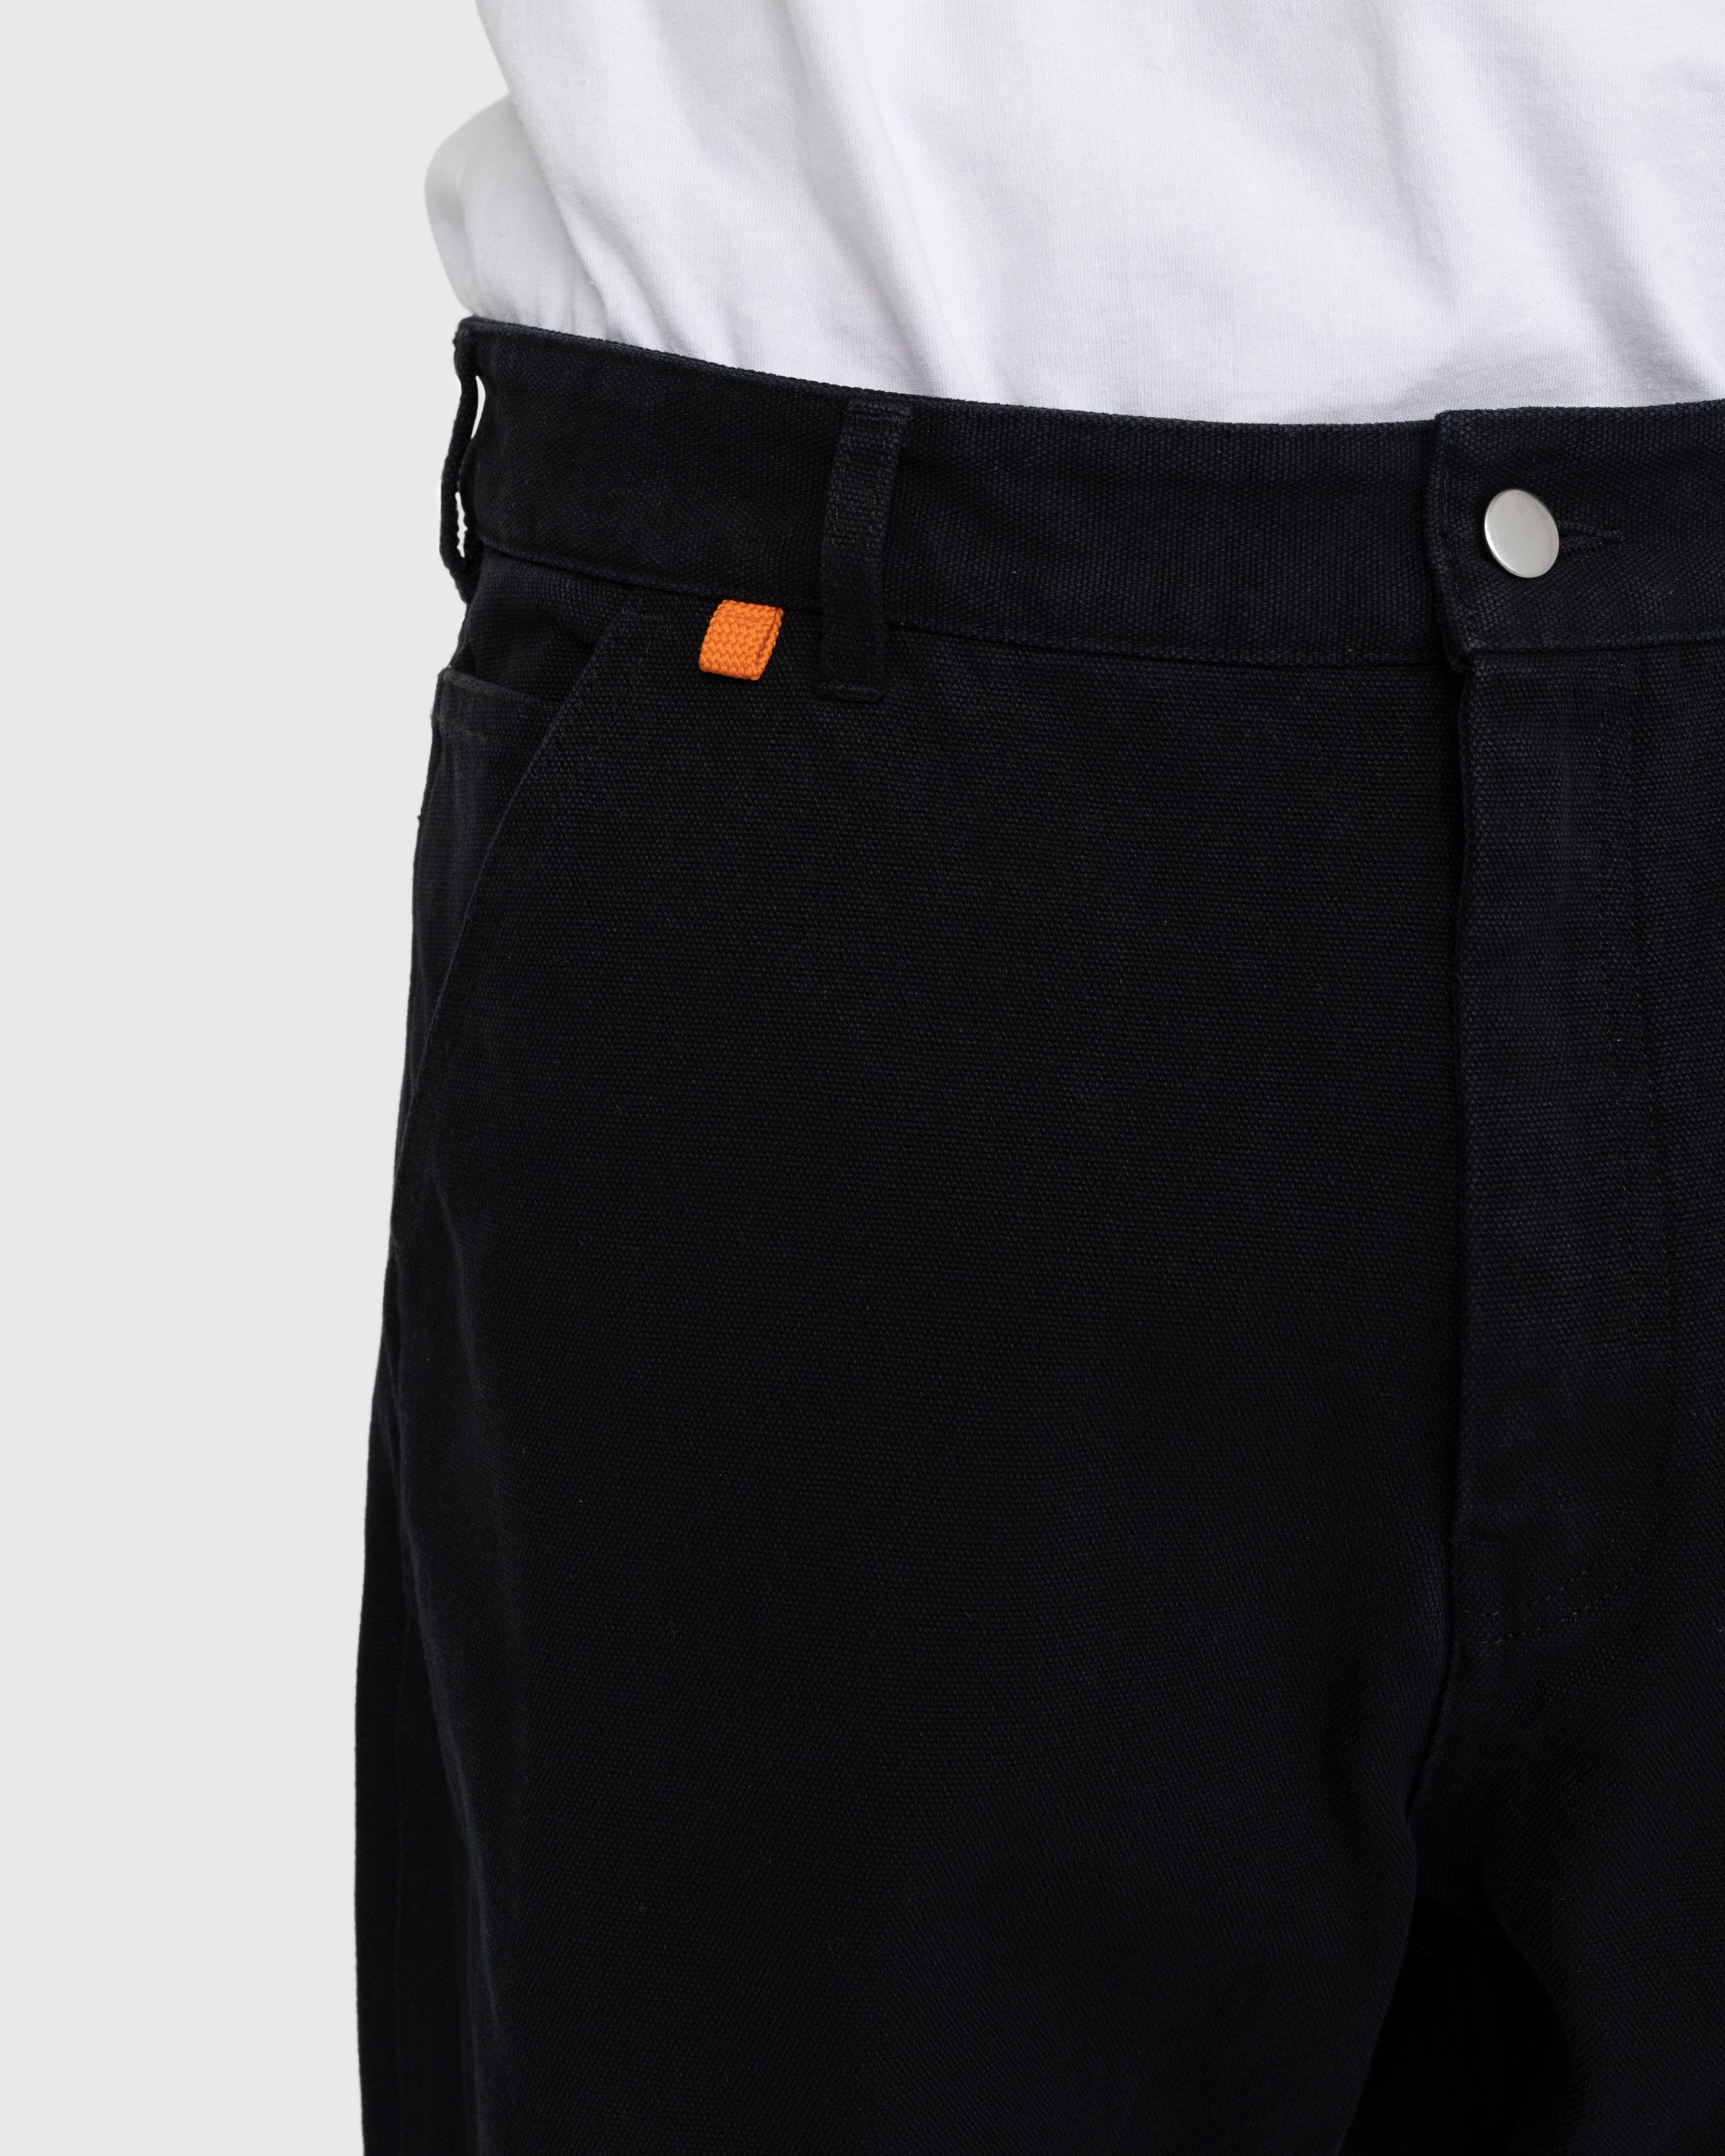 Acne Studios - Cotton Workwear Trousers Black - Clothing - Black - Image 5